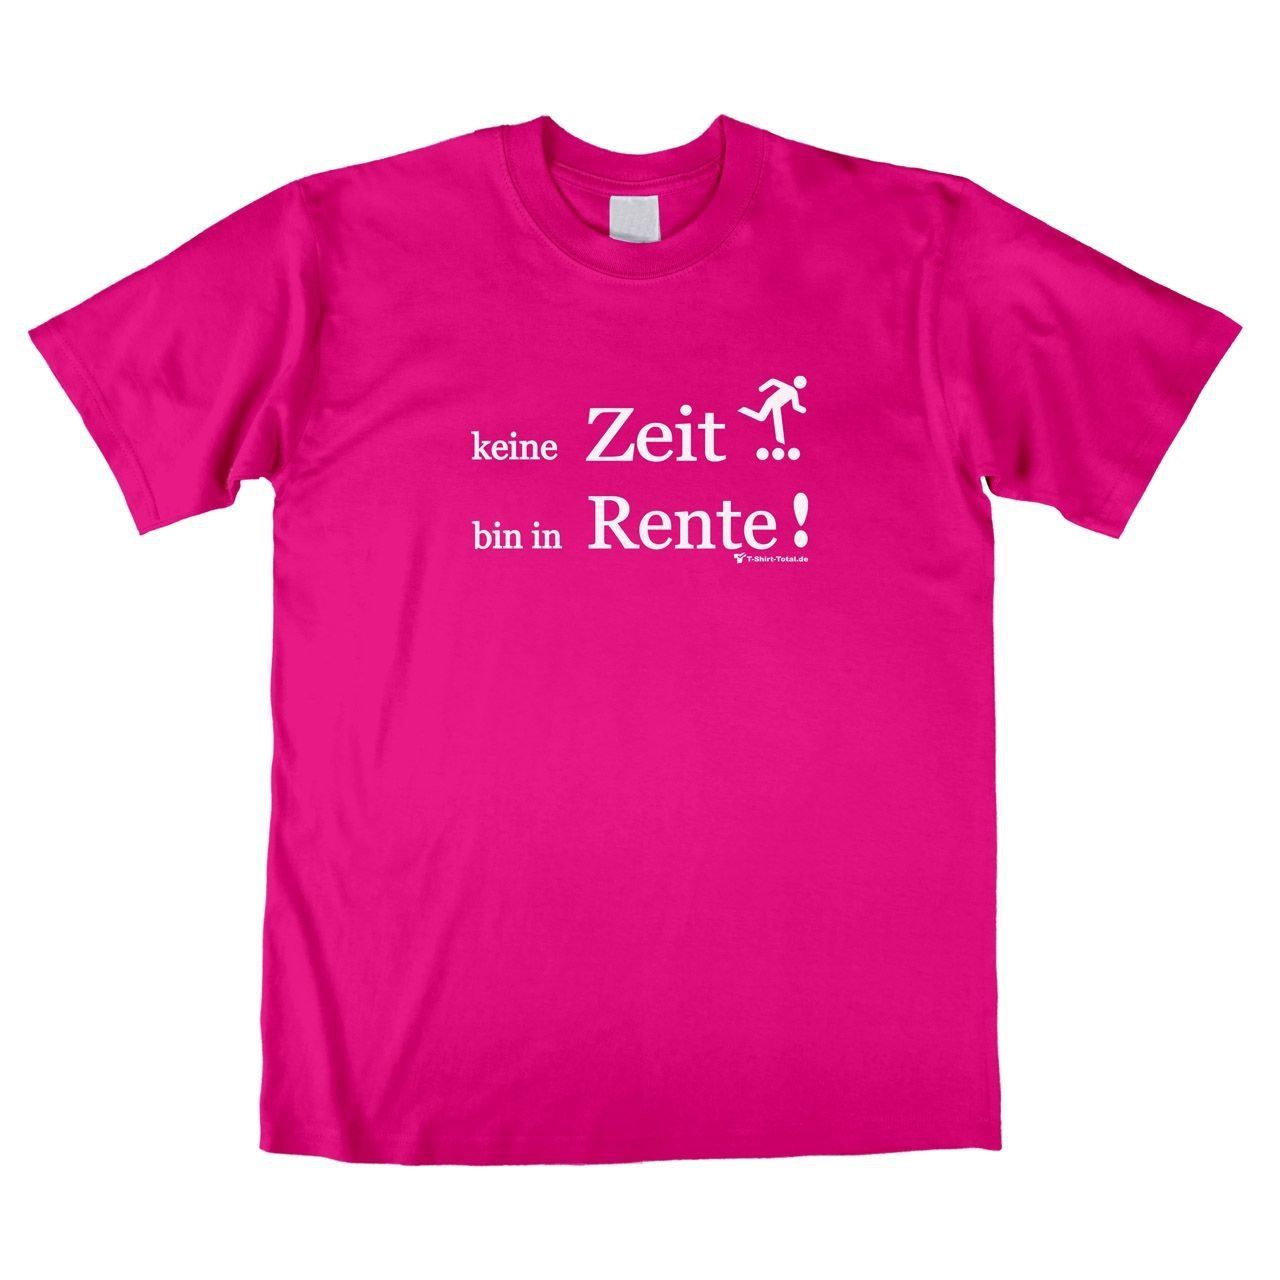 Bin in Rente Unisex T-Shirt pink Extra Large